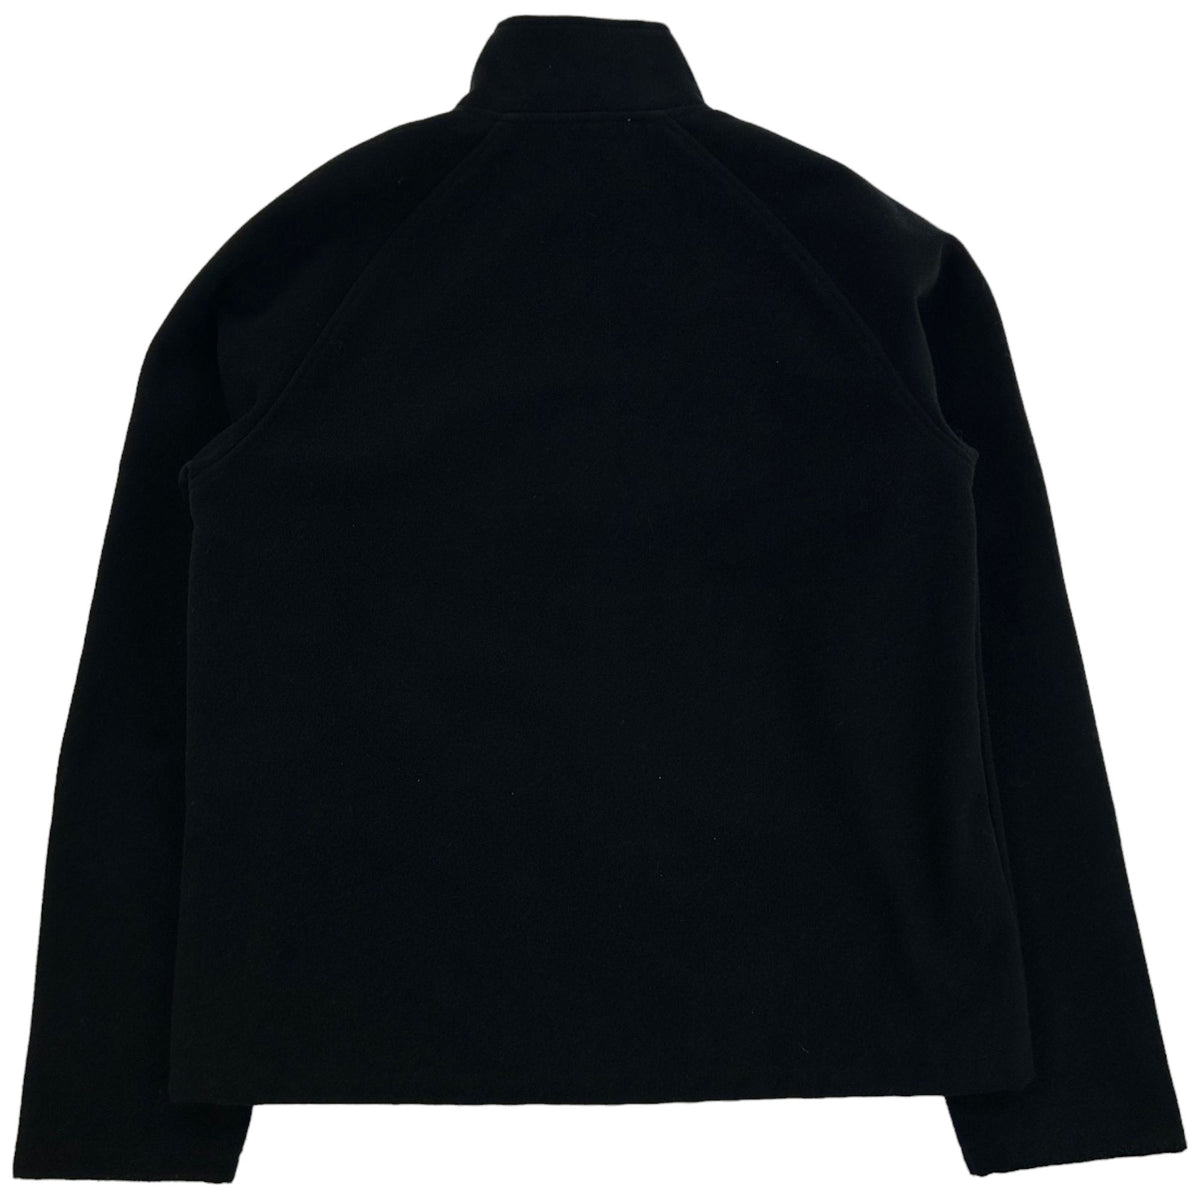 Vintage Yves Saint Laurent Fleece Jacket Size M